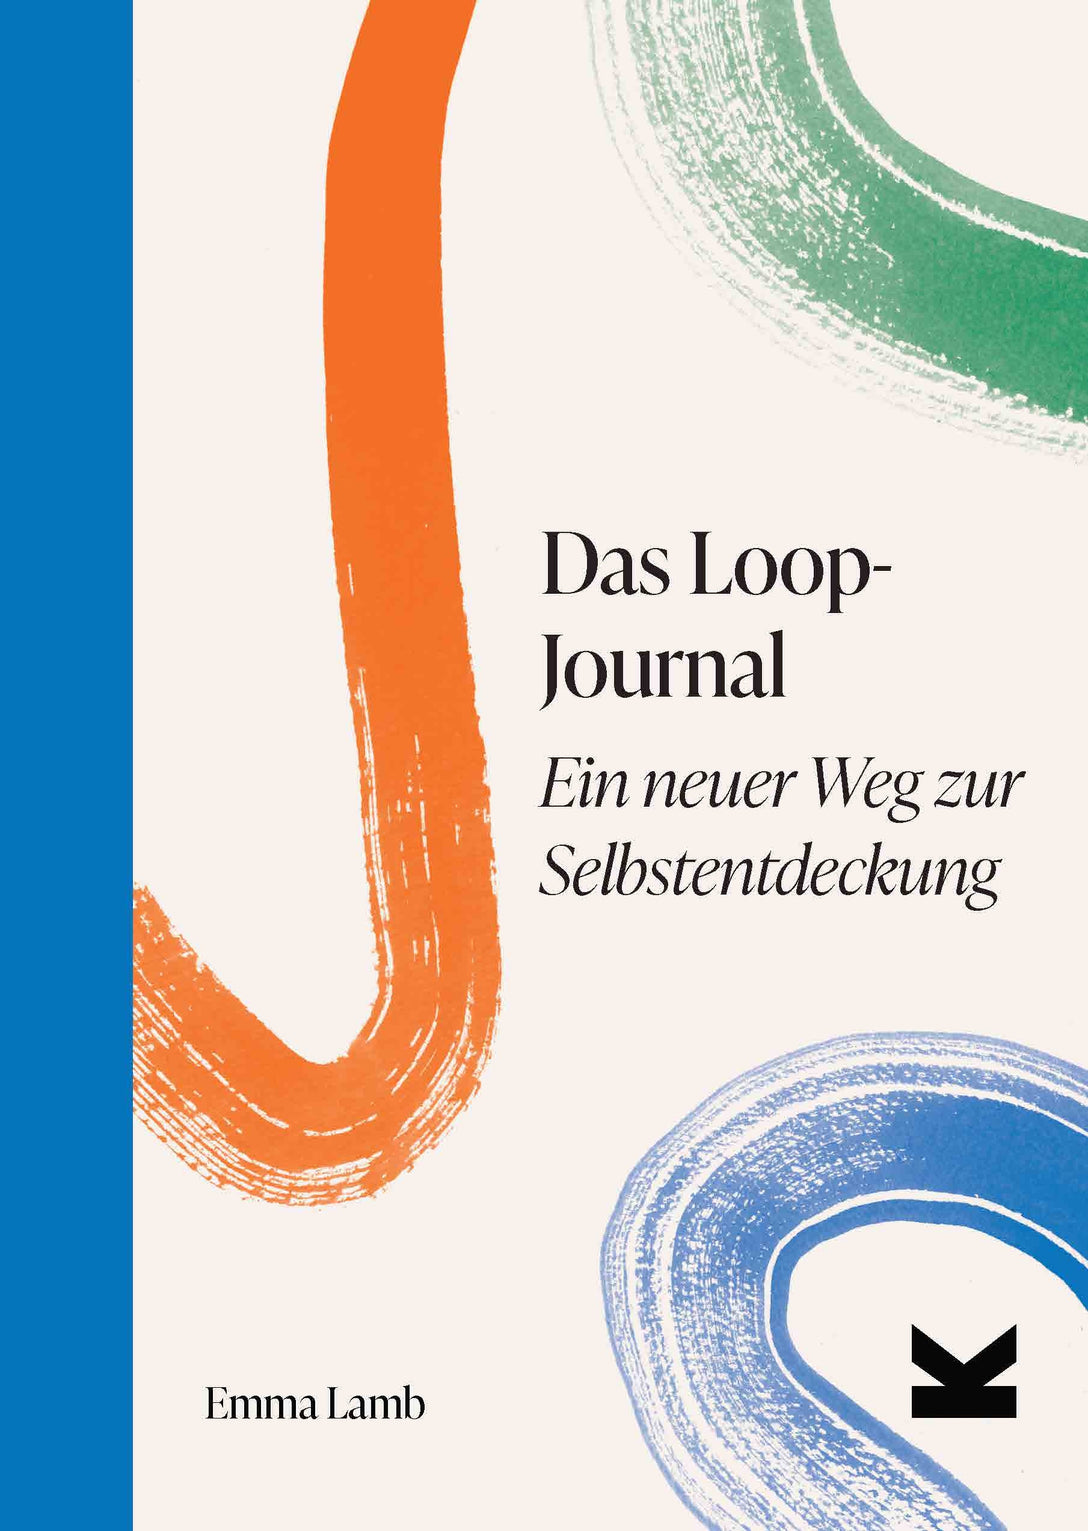 Das Loop-Journal by Frederik Kugler, Emma Lamb